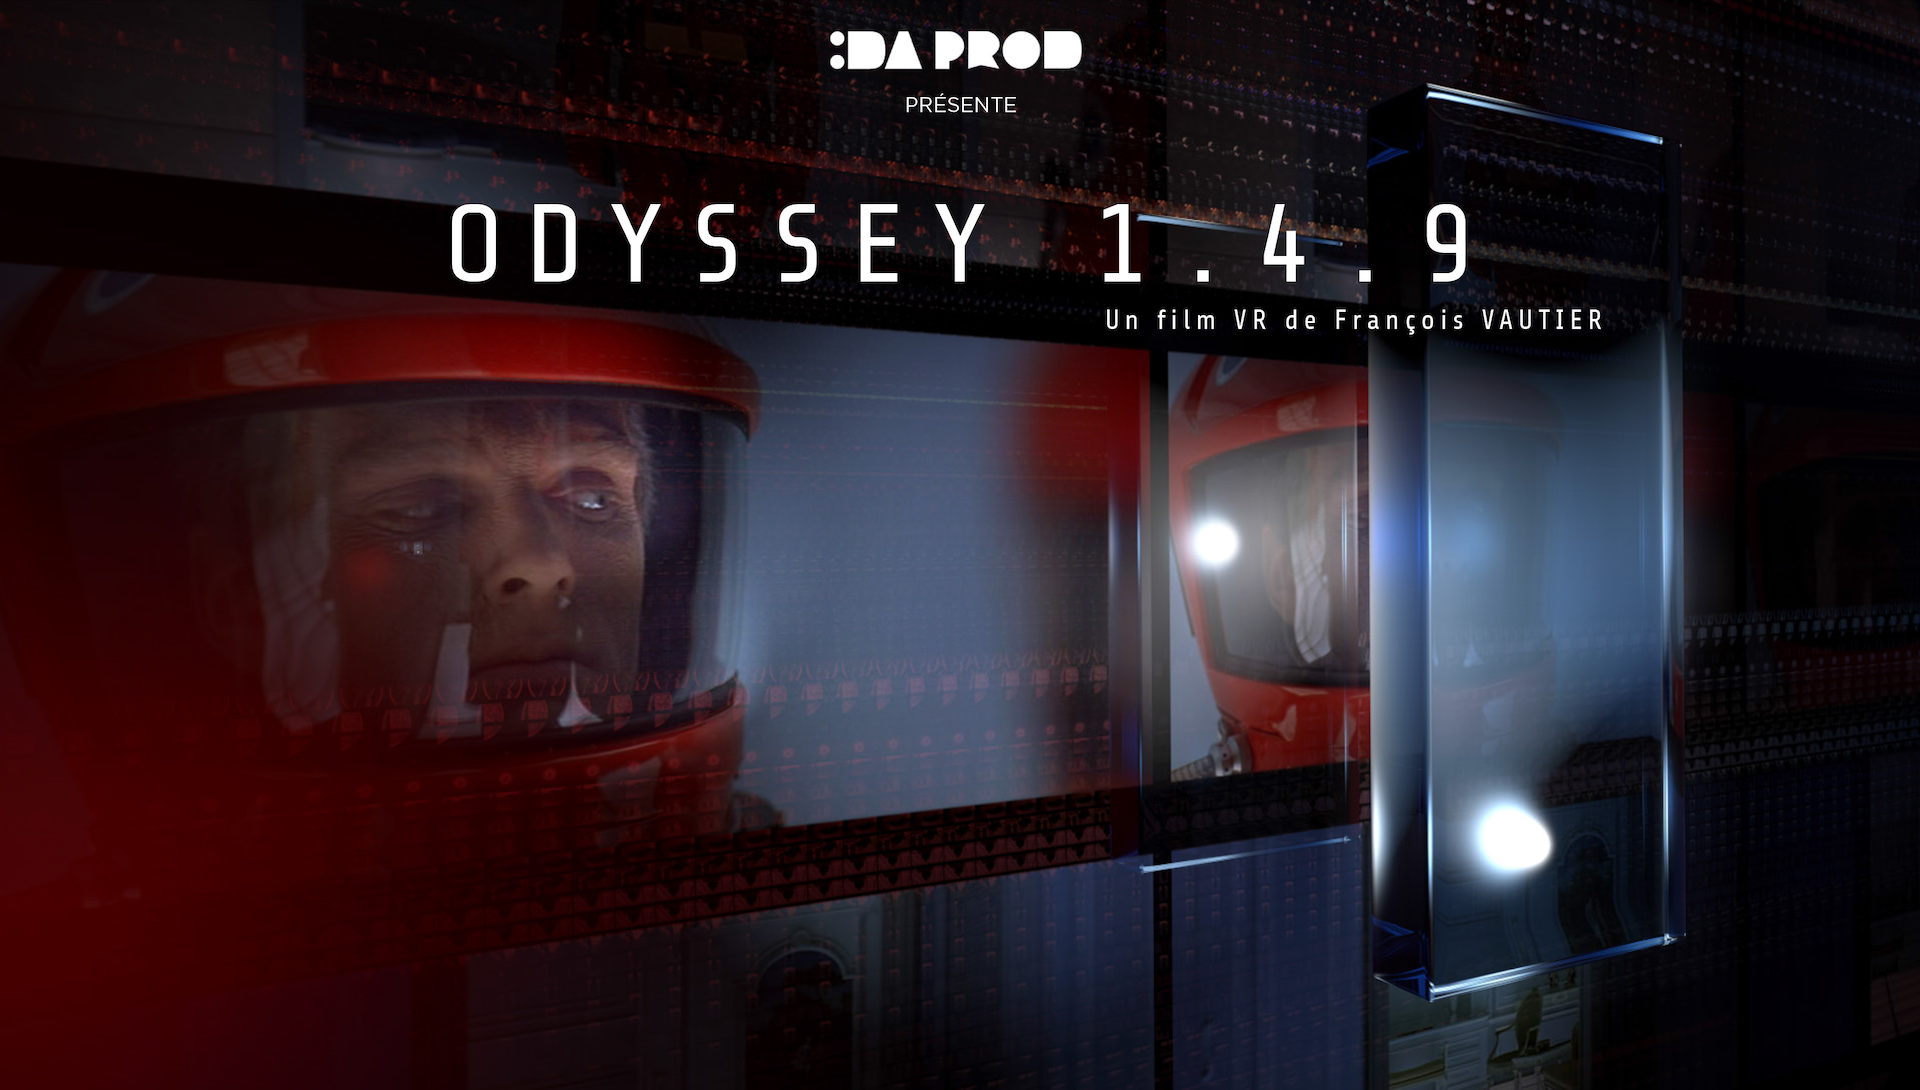 L'affiche d'Odyssey 1.4.9